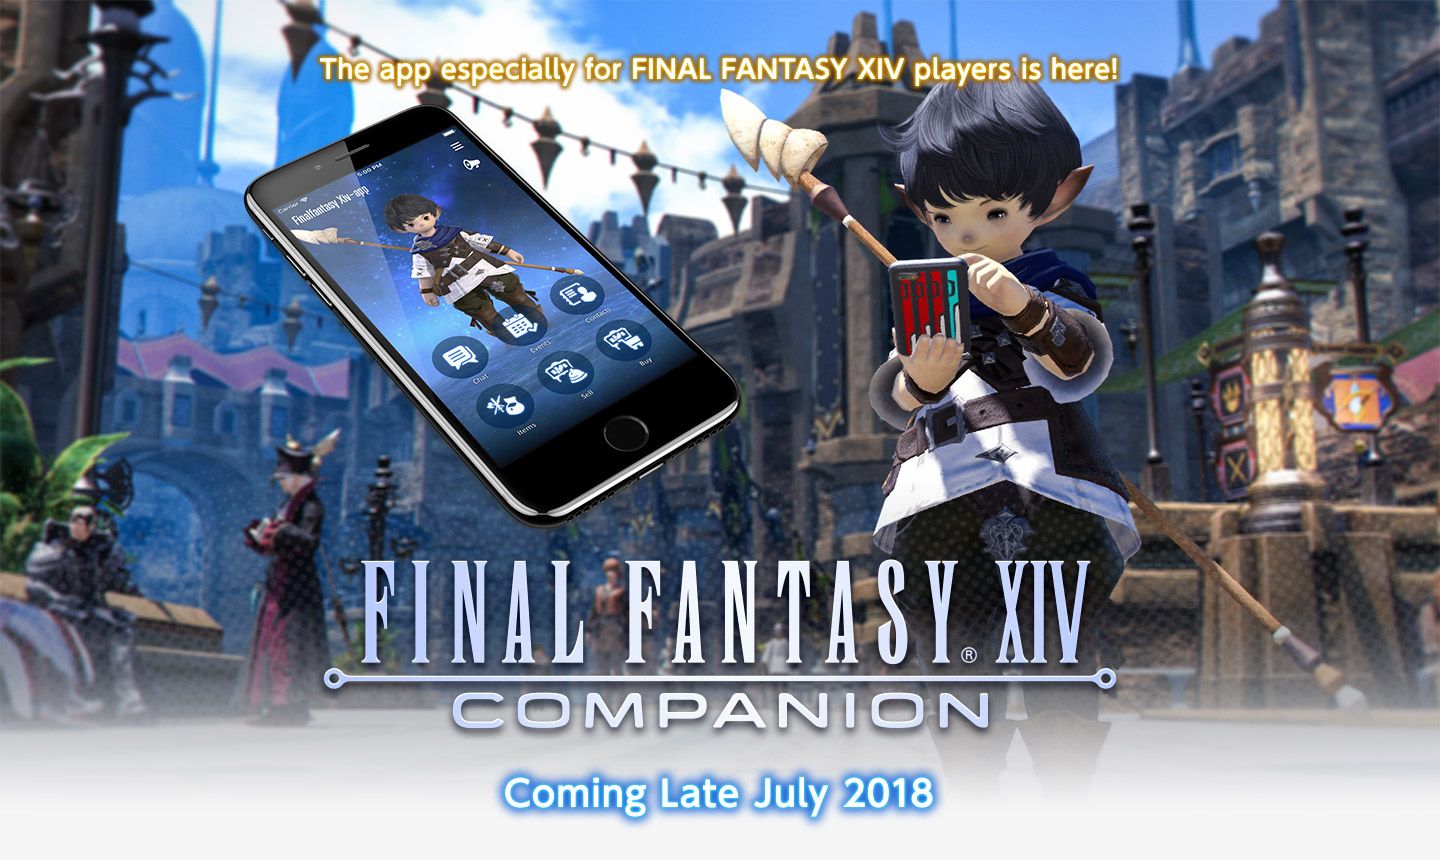 Final Fantasy XIV Companion